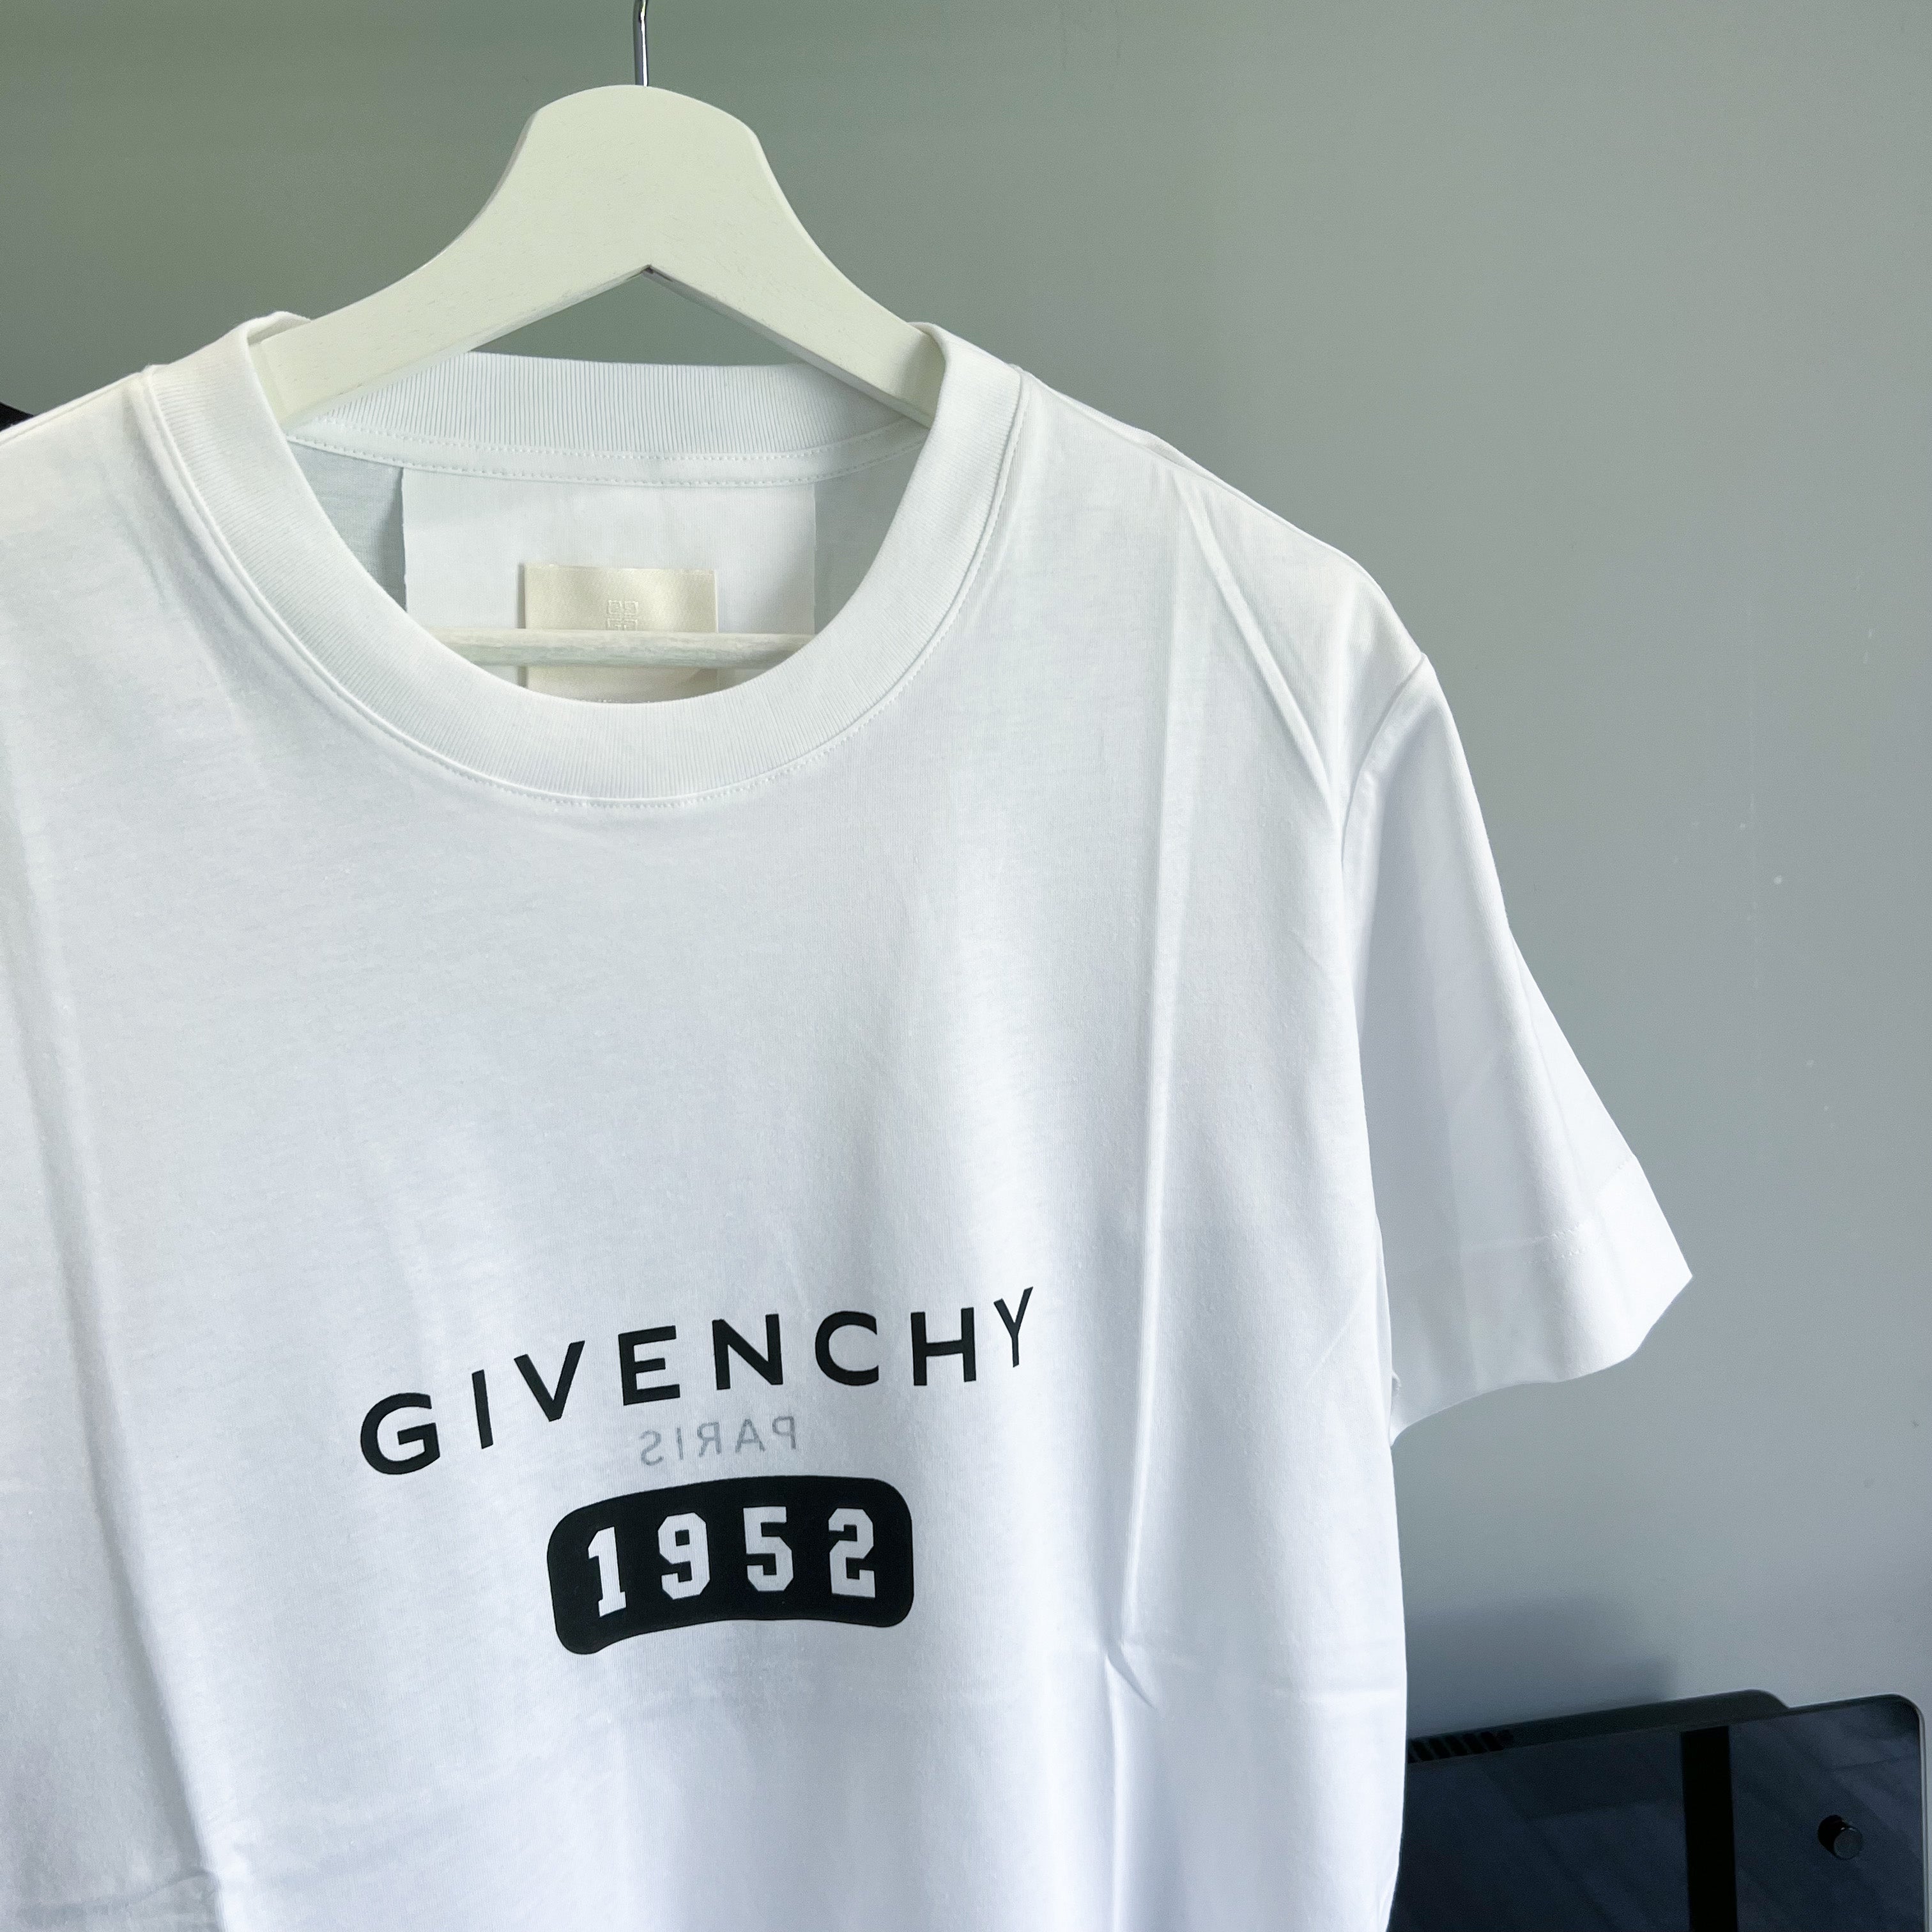 Givenchy 1952 Tee - White